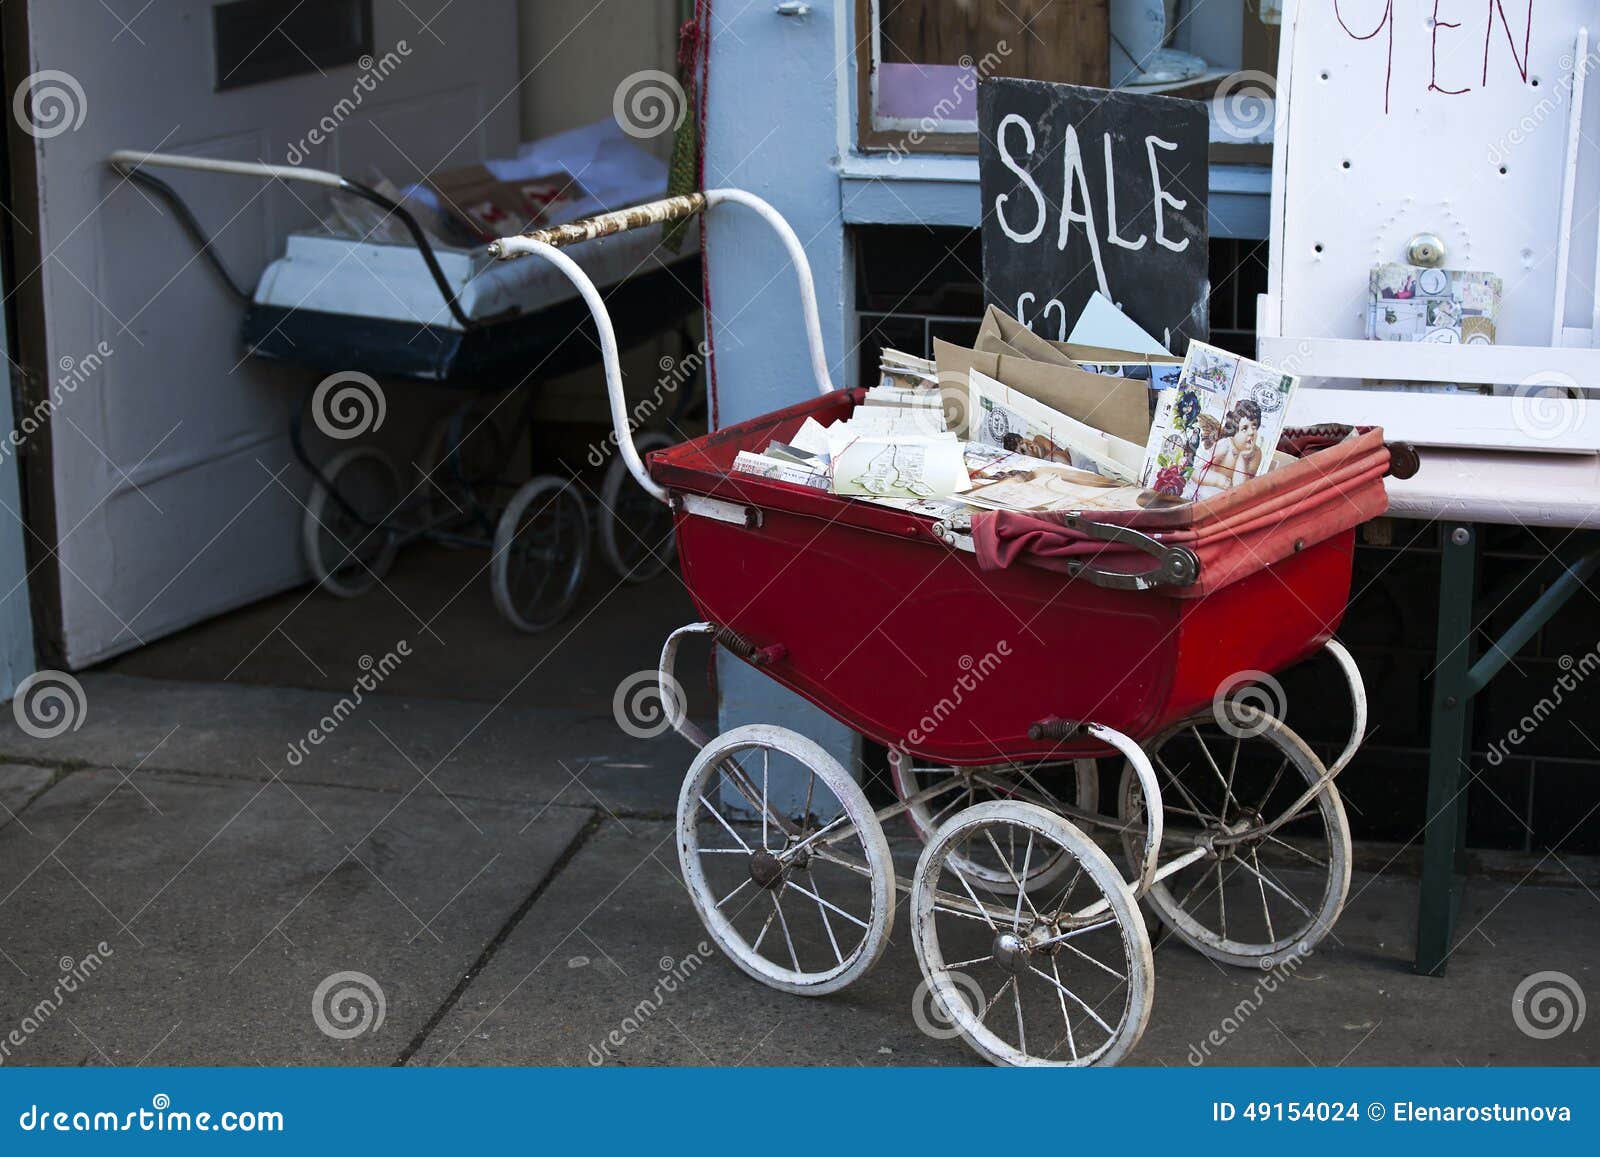 Baby stroller and pram market in